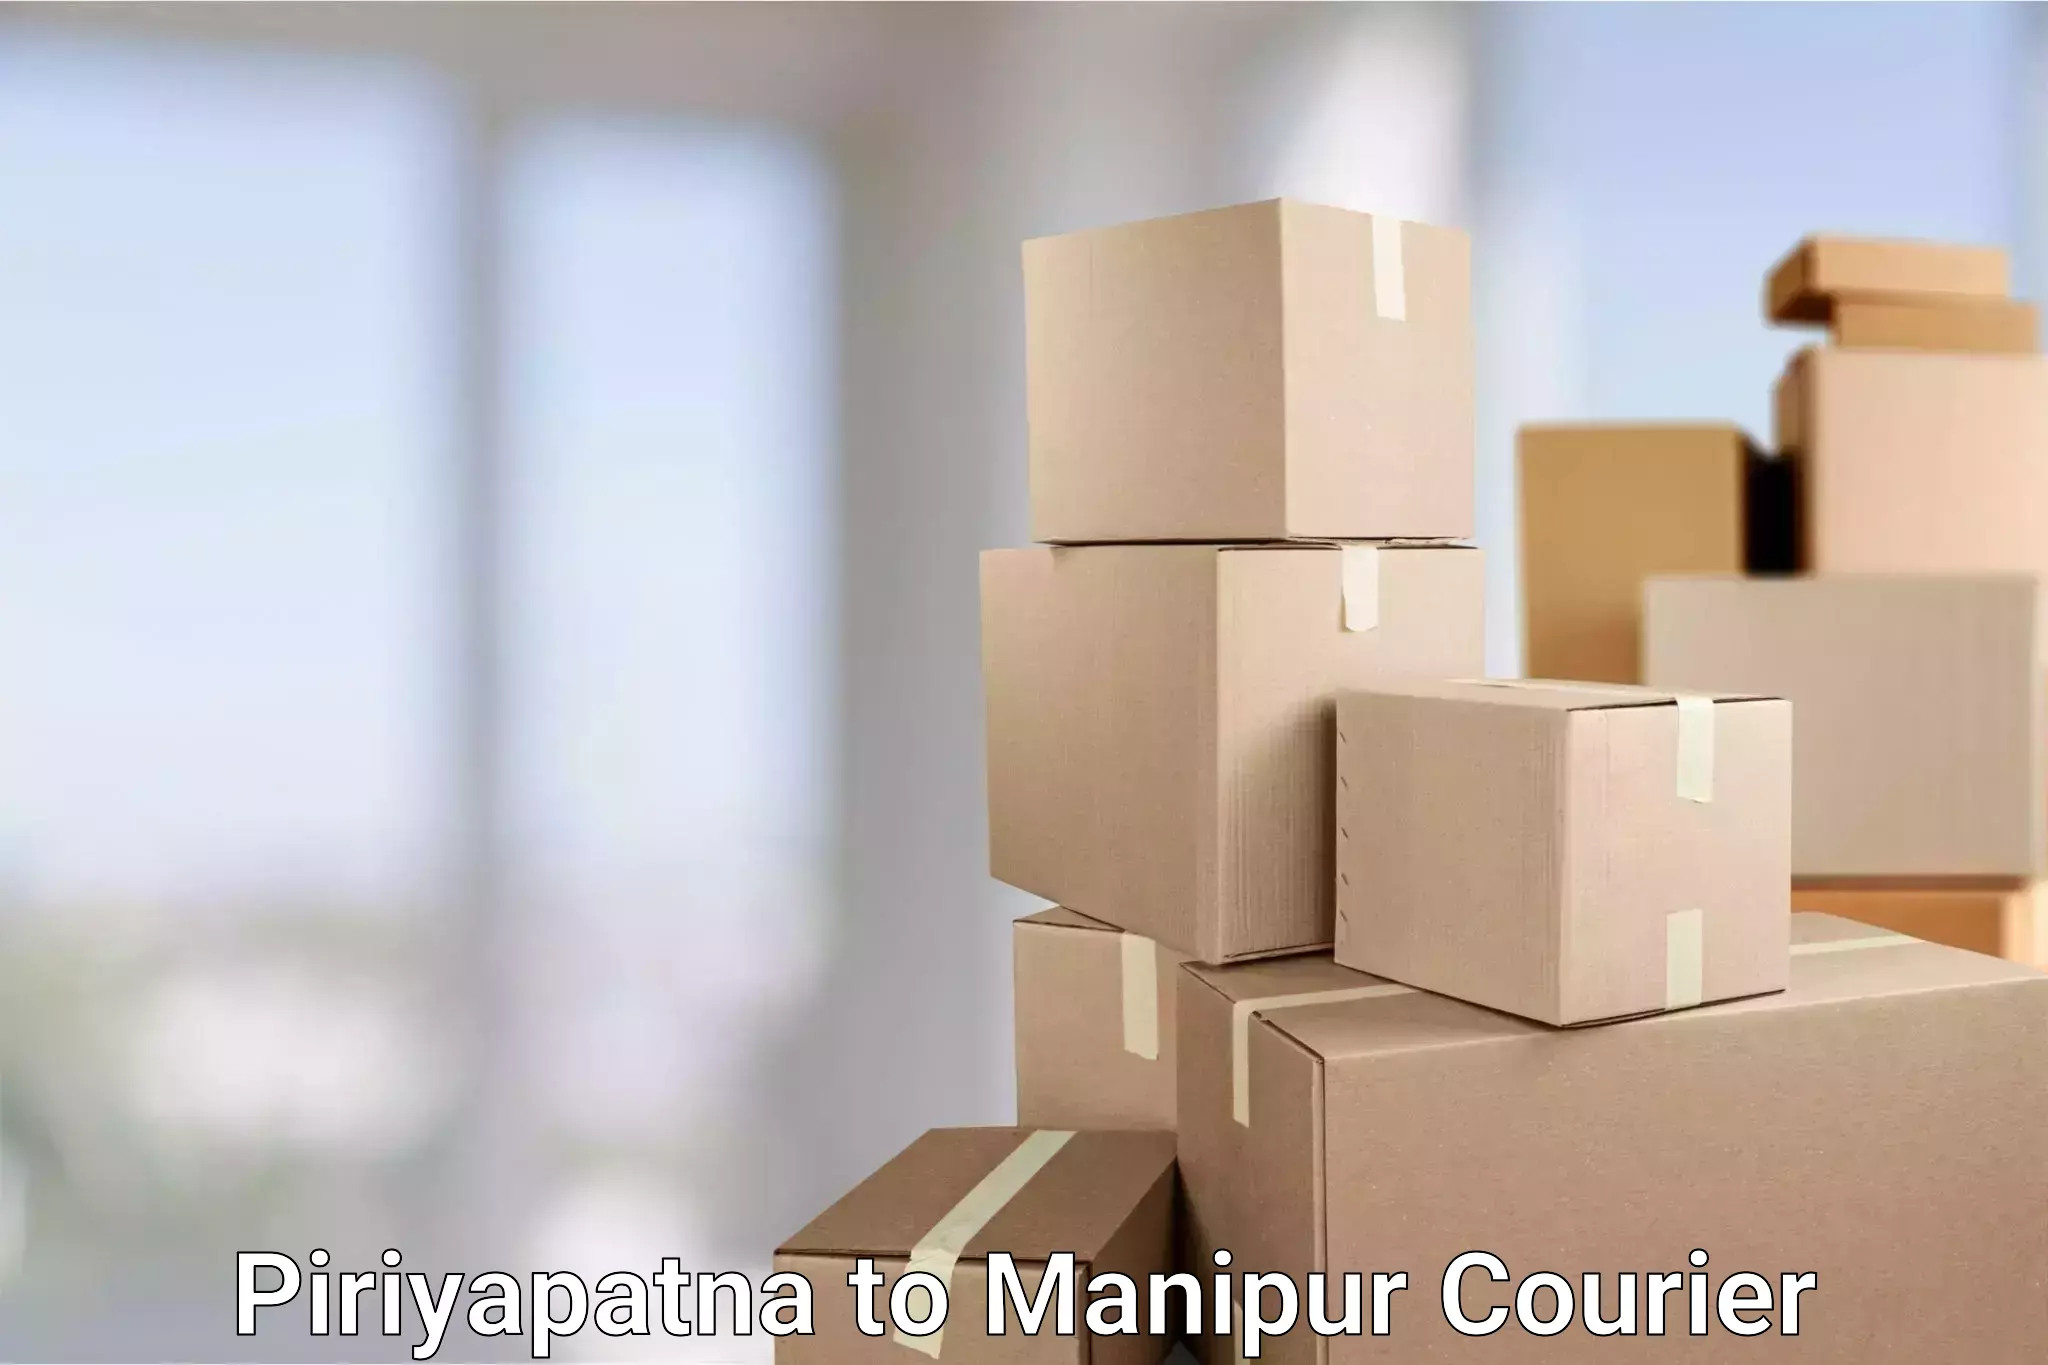 Custom courier packaging Piriyapatna to Manipur